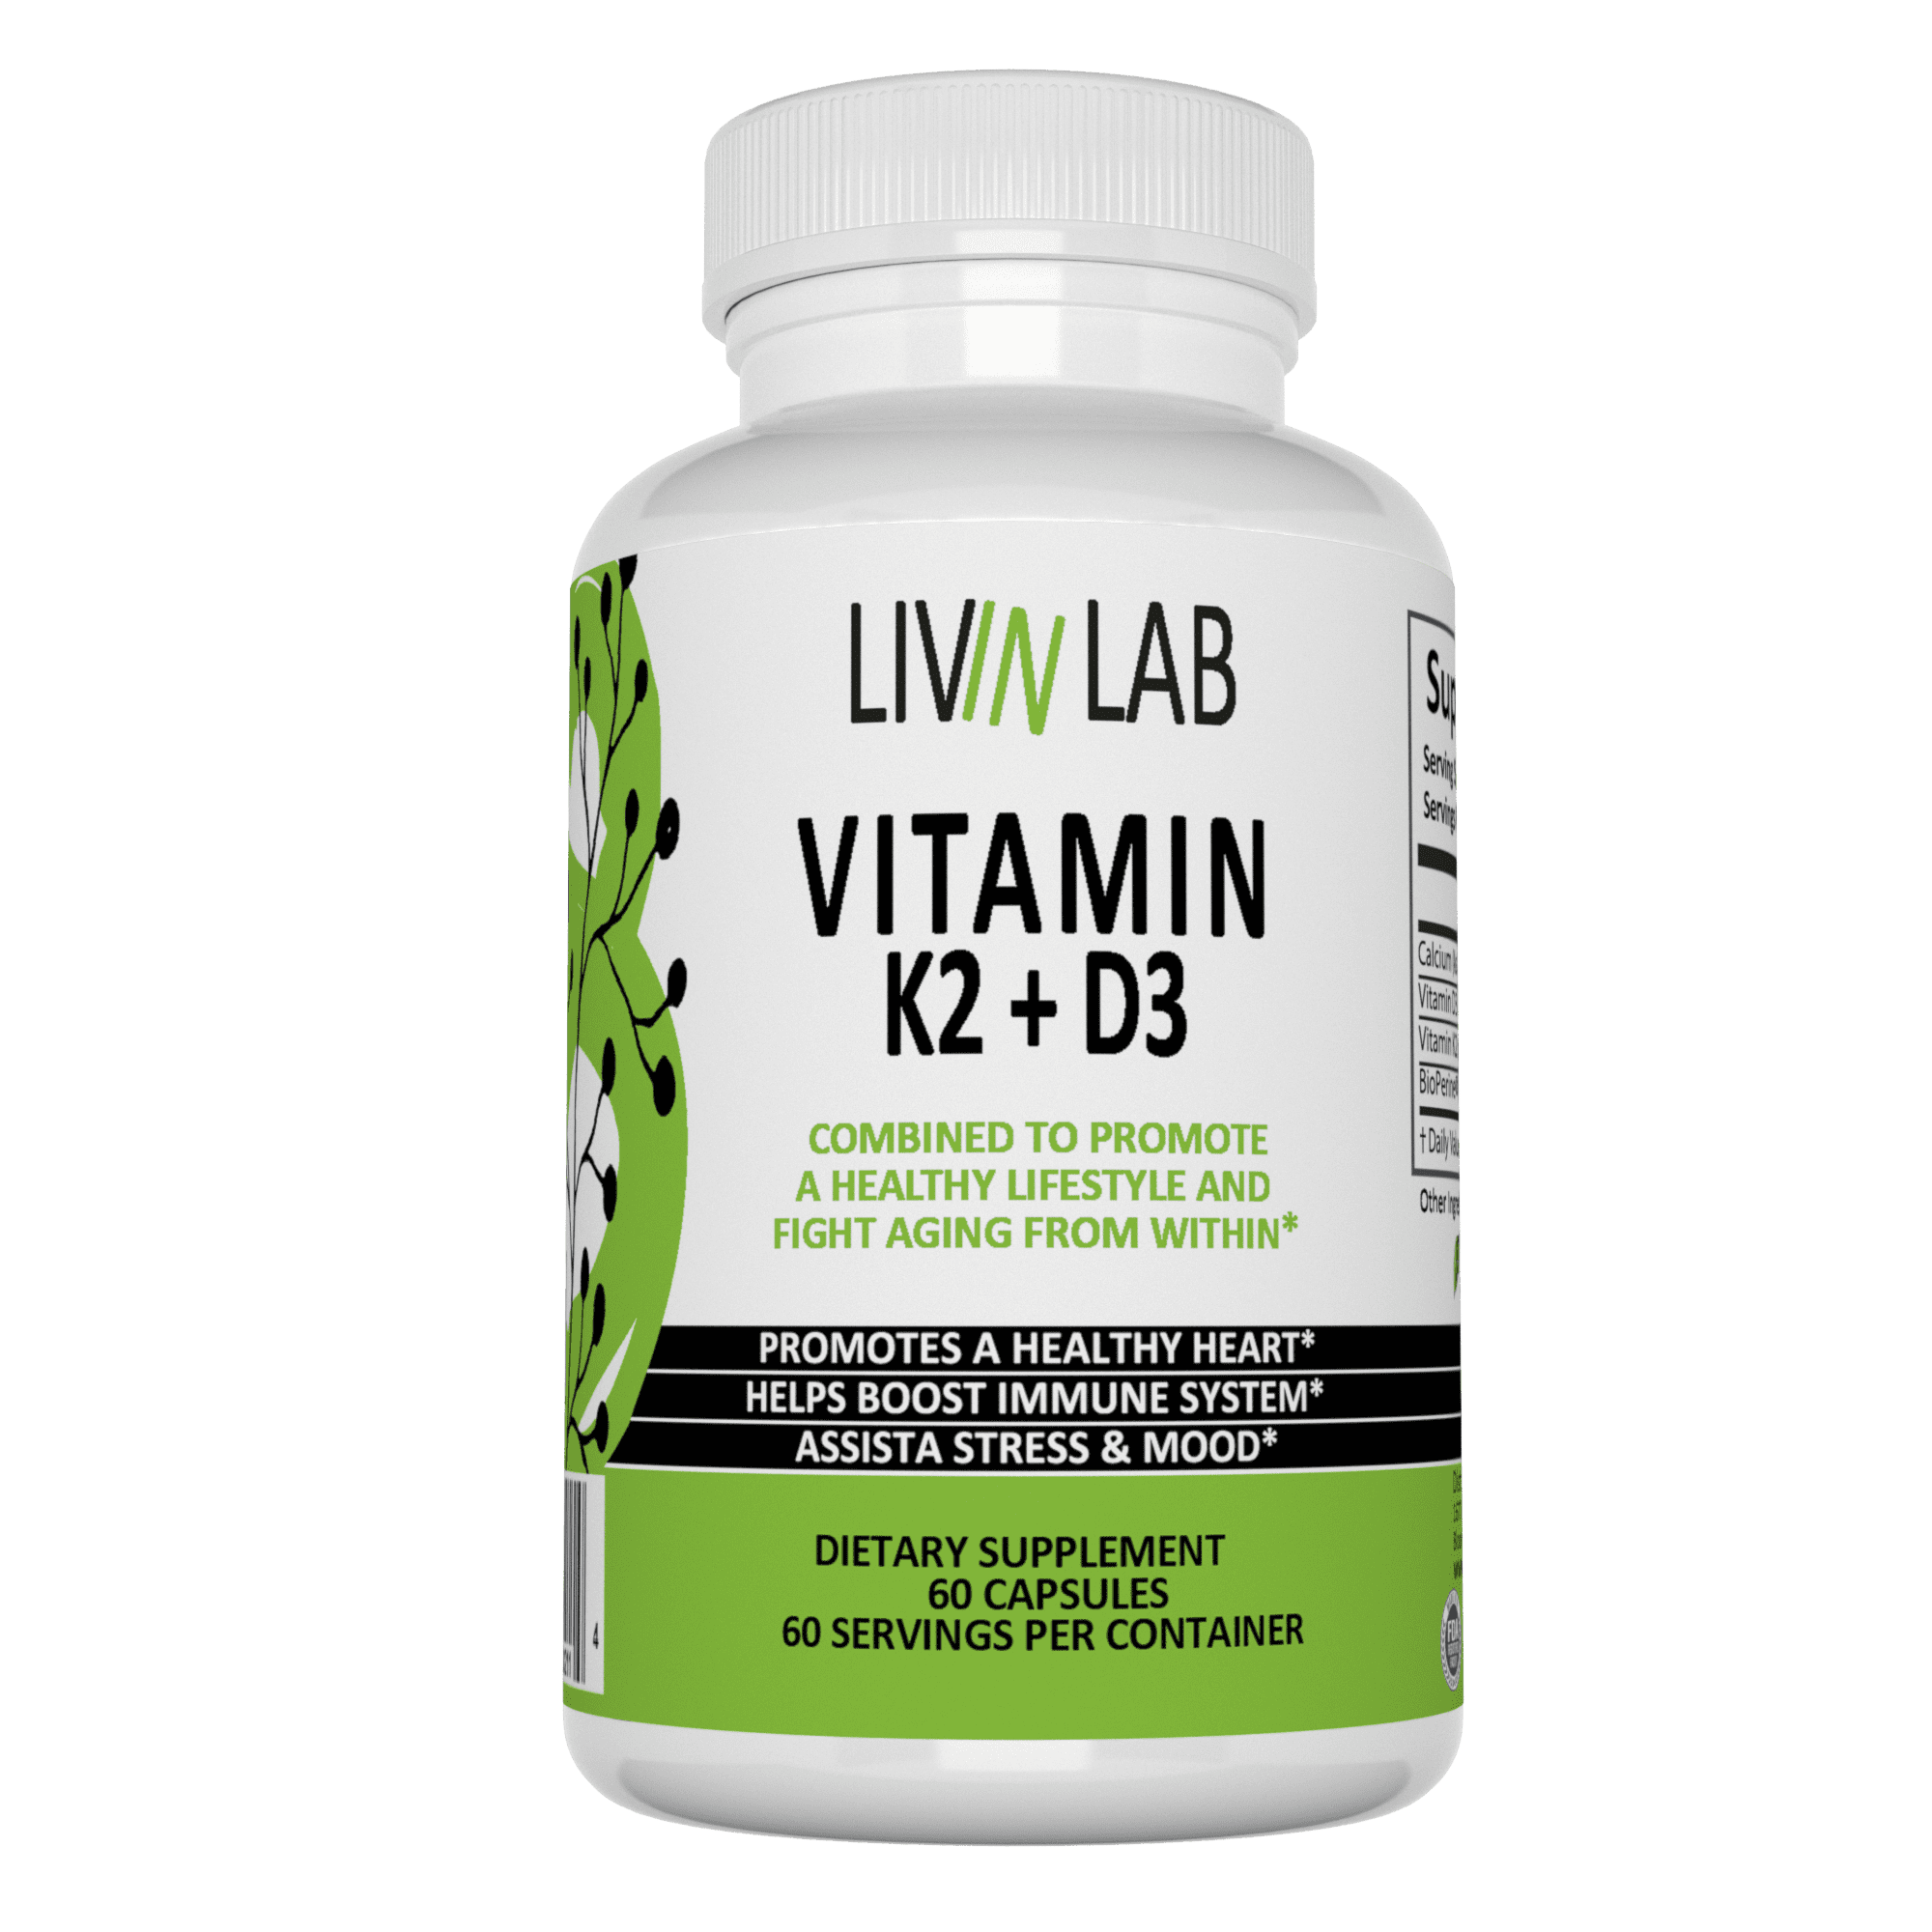 Livin Lab Vitamin K2 D3 |Healthy Immune Support & Improve Mood | Helps ...